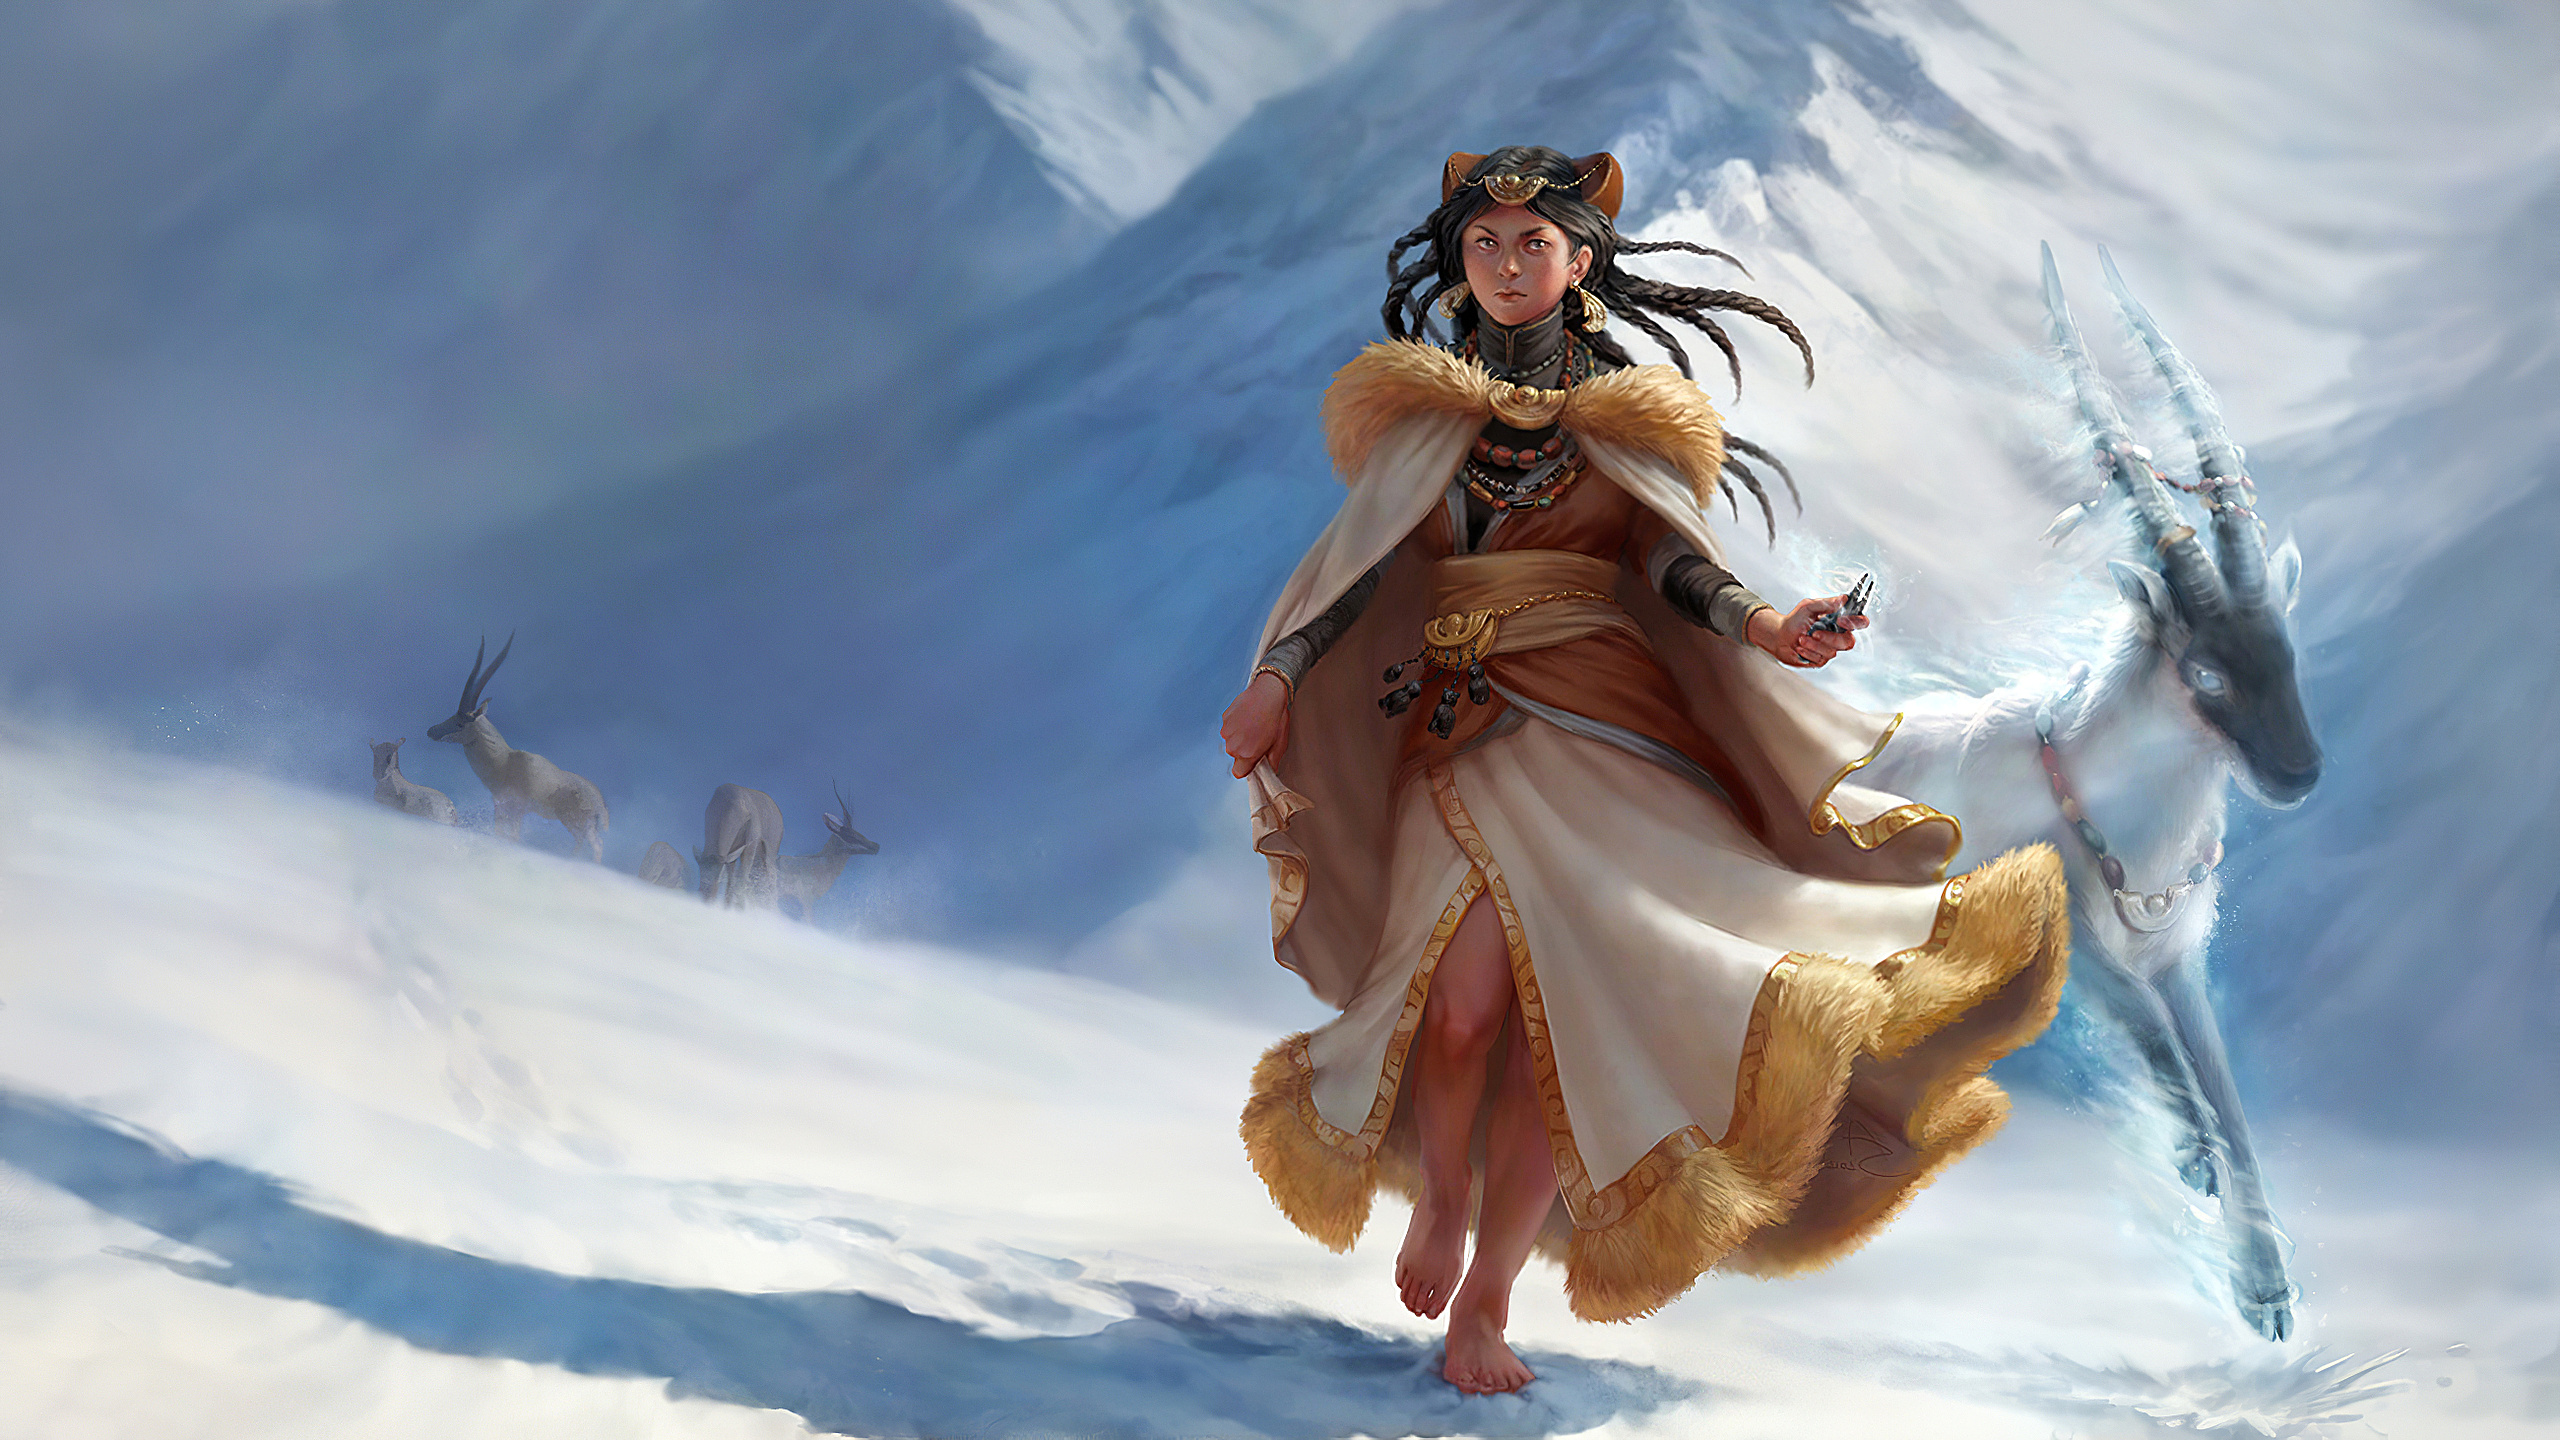 Digital Art Artwork Fantasy Art Shaman Snow Mountains Winter Creature Women Magic Daylight 2560x1440